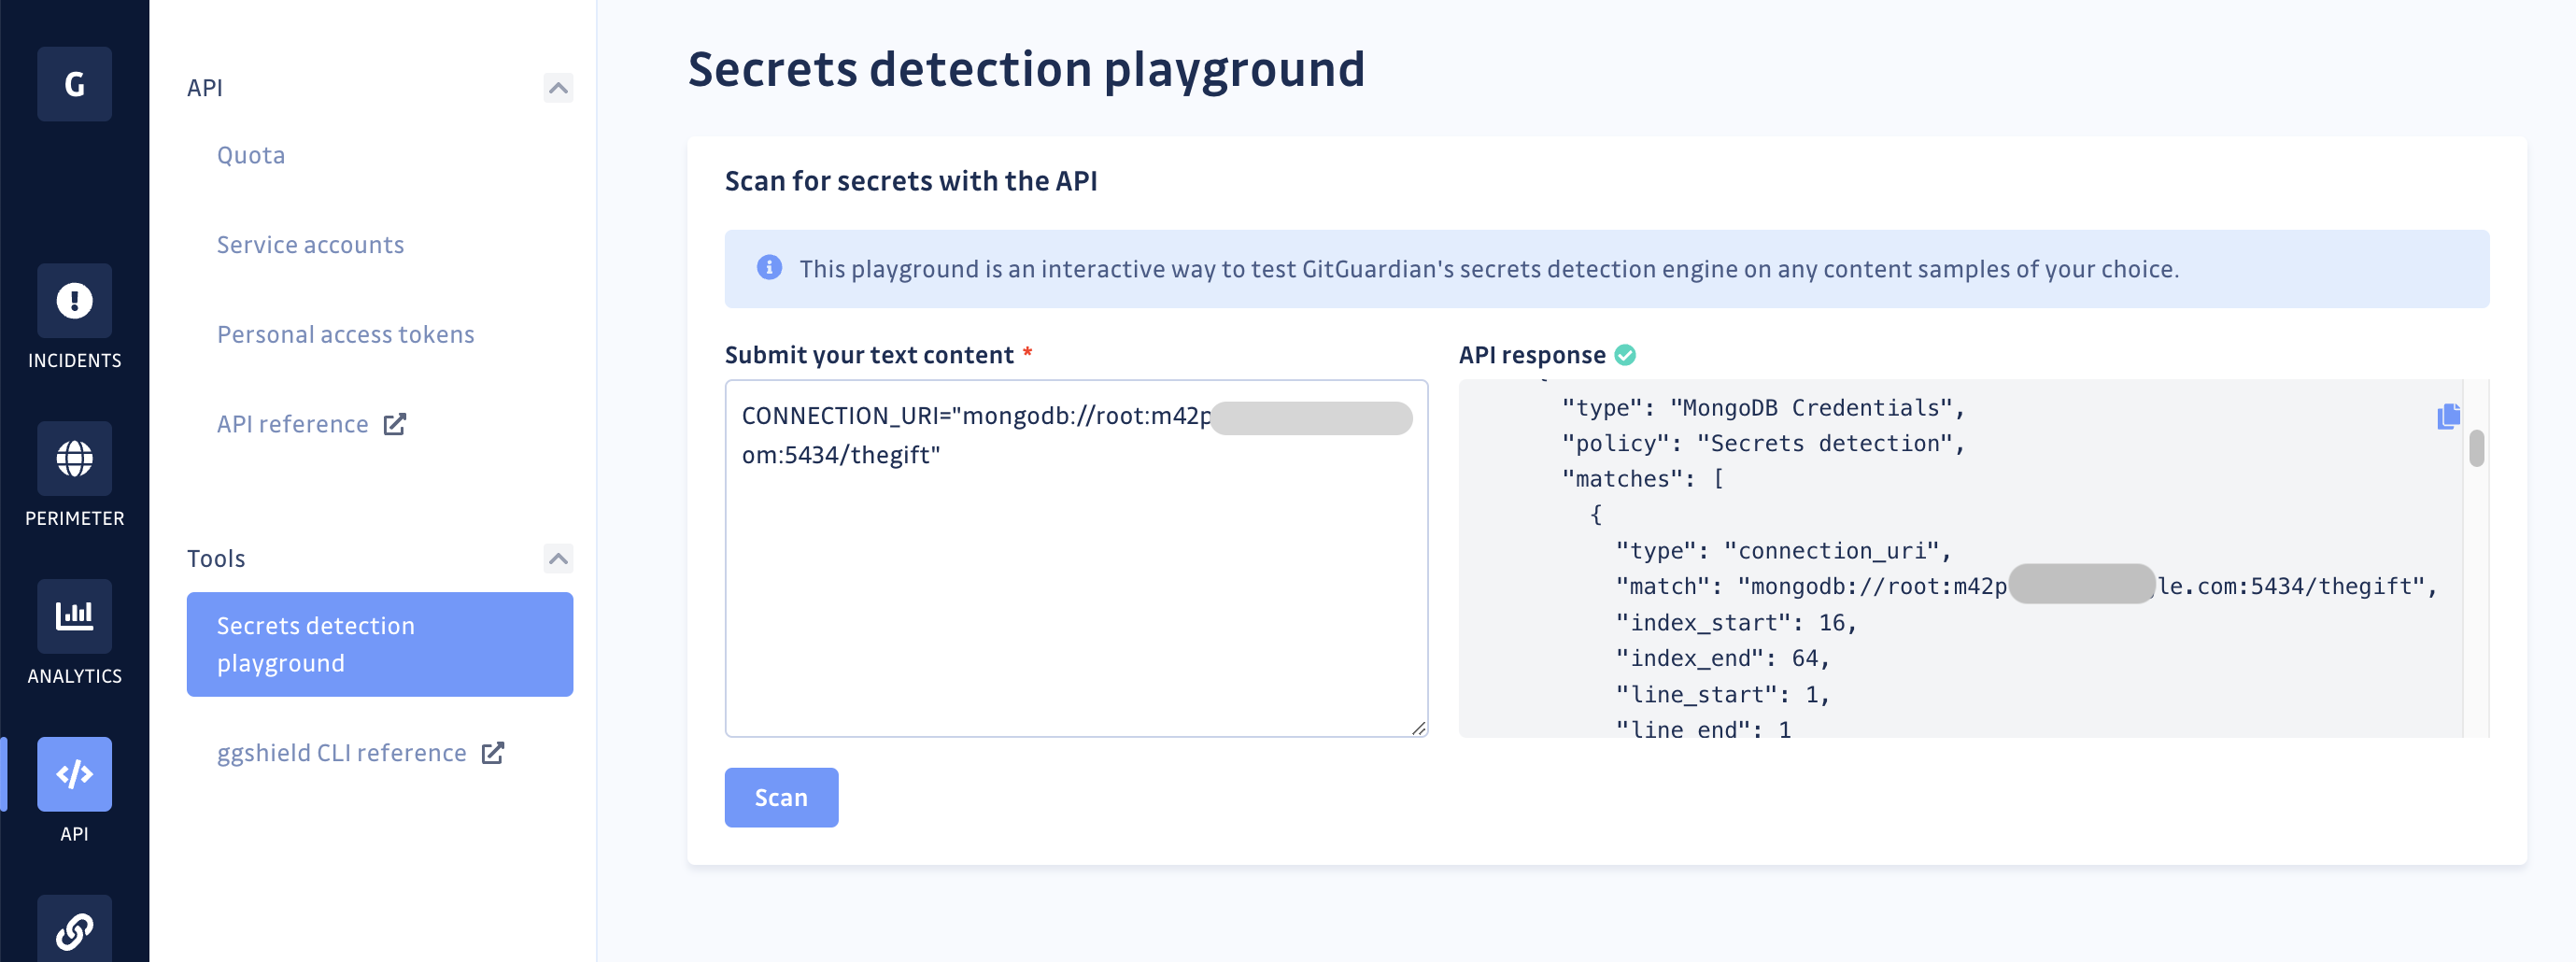 API Secrets detection playground